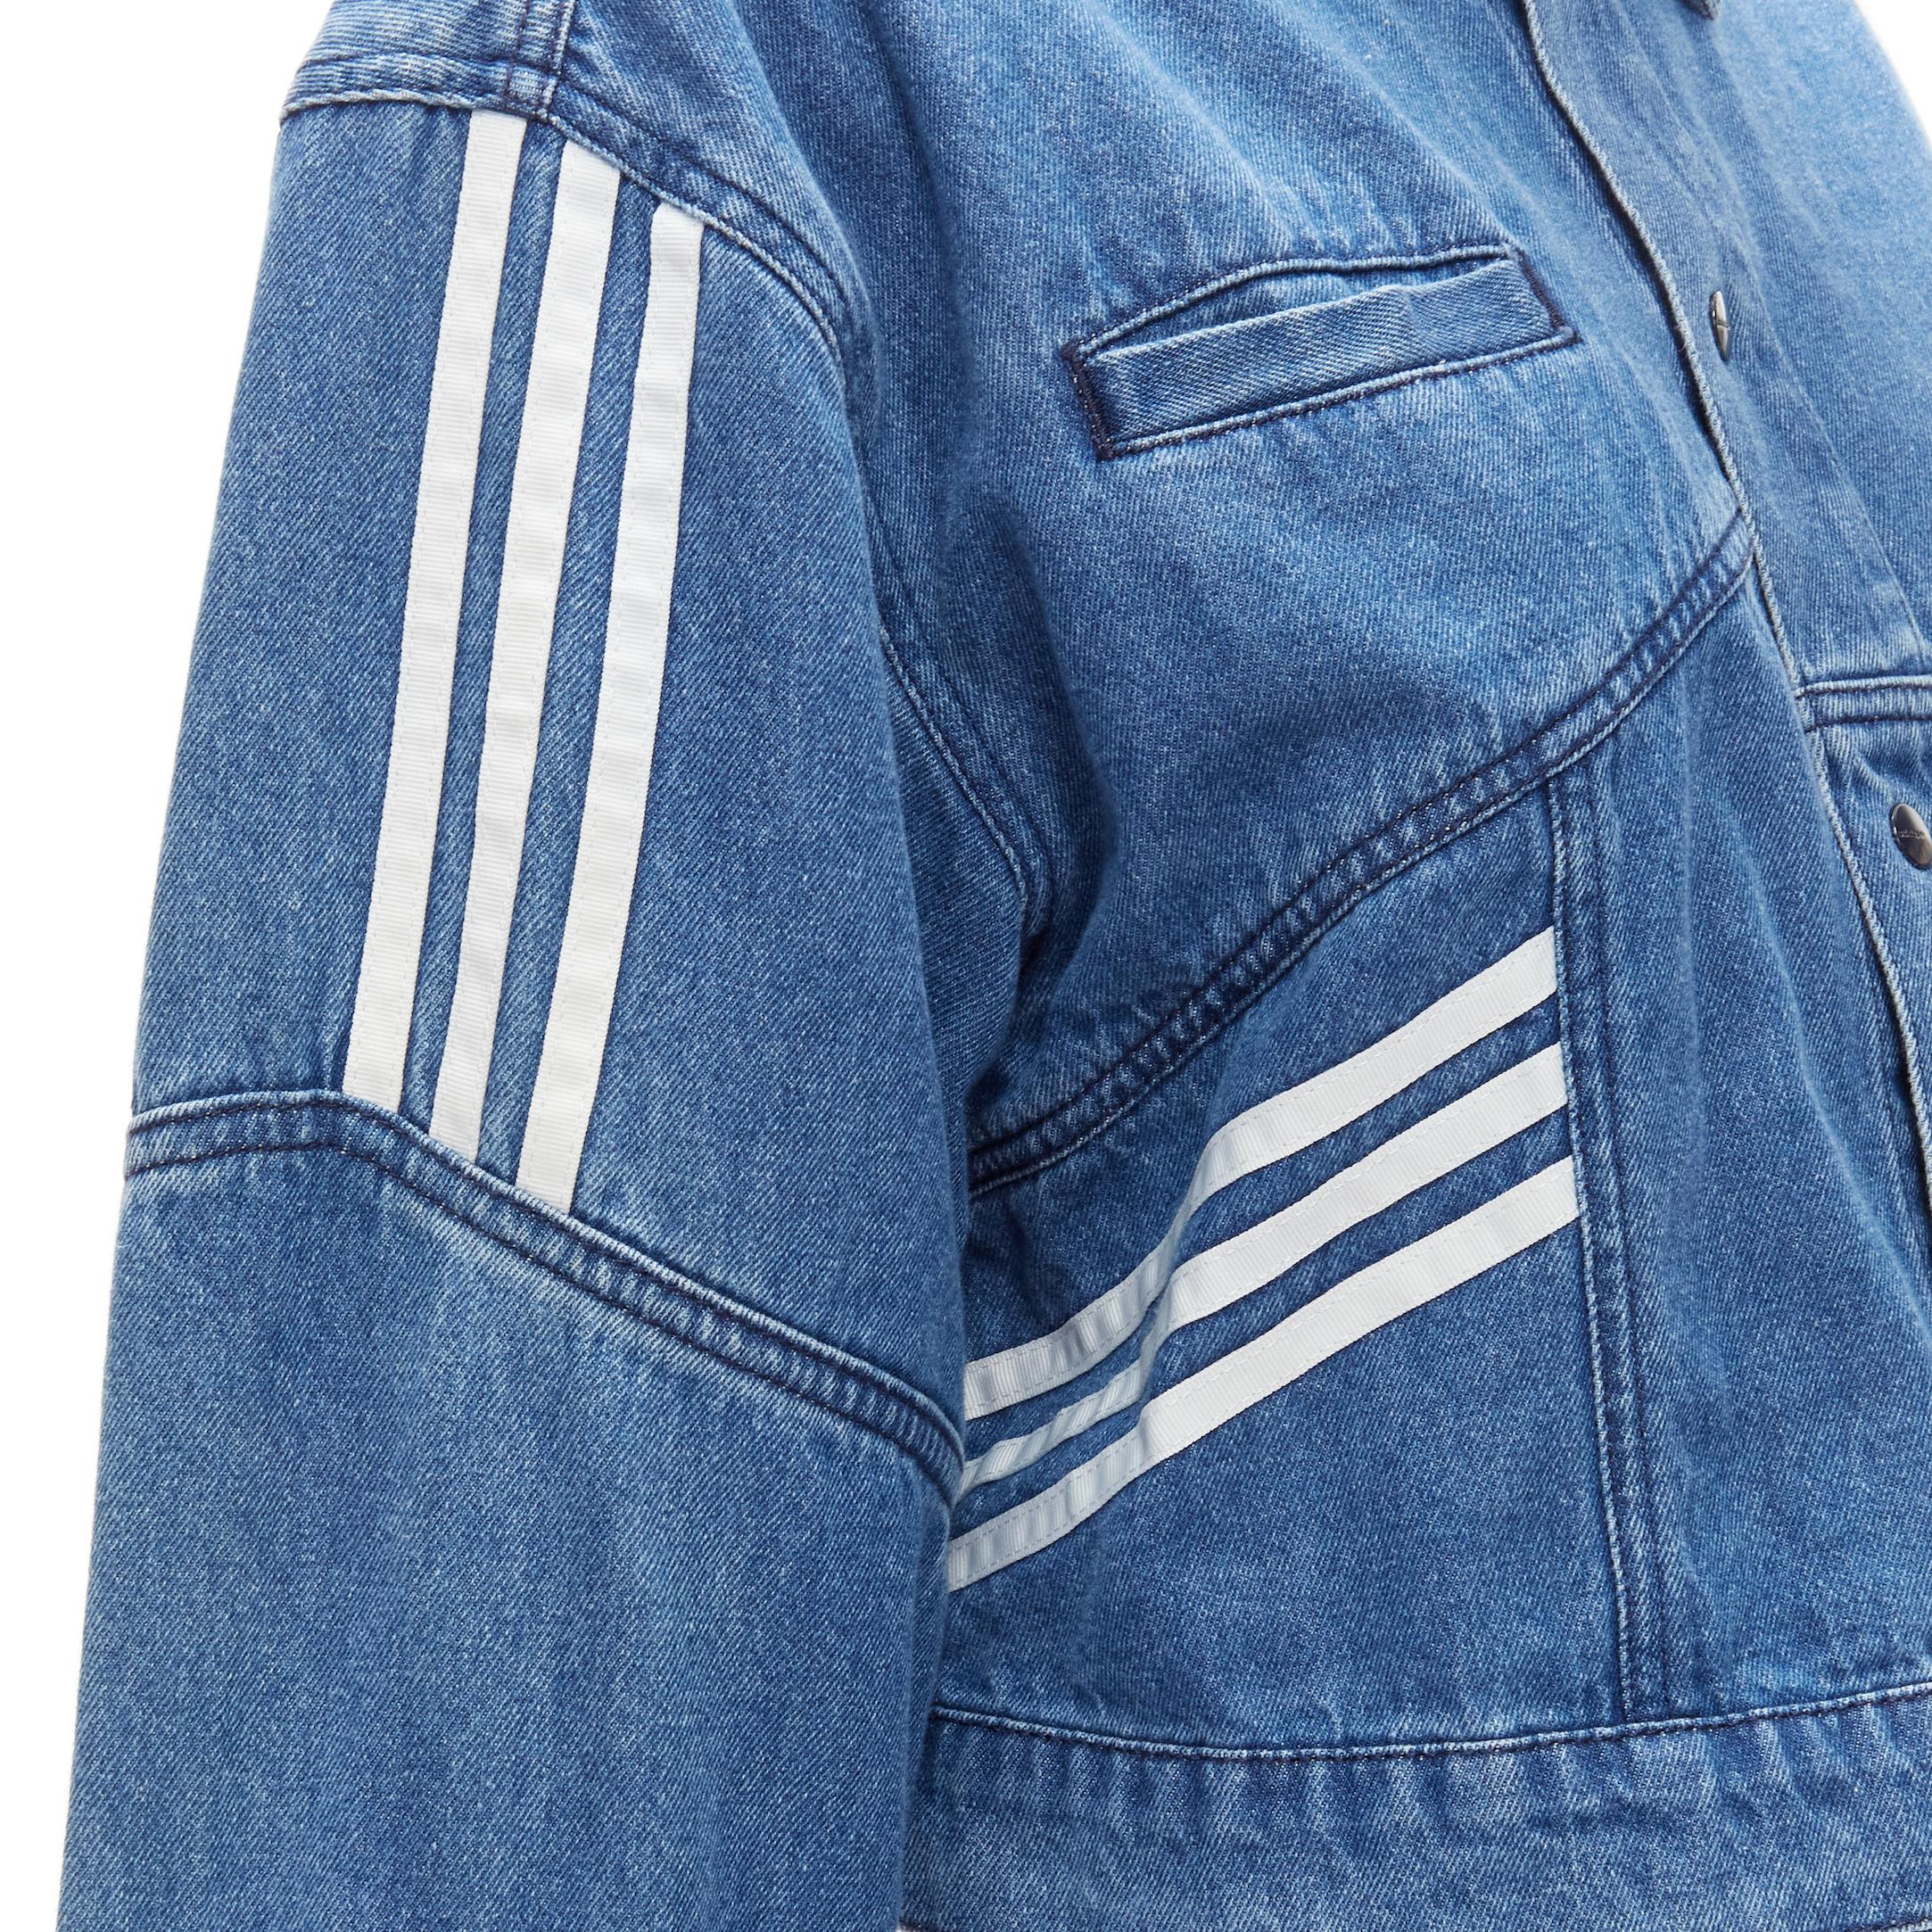 ADIDAS DANIELLE CATHARI blue denim patchwork cropped jacket mini skirt set S 1